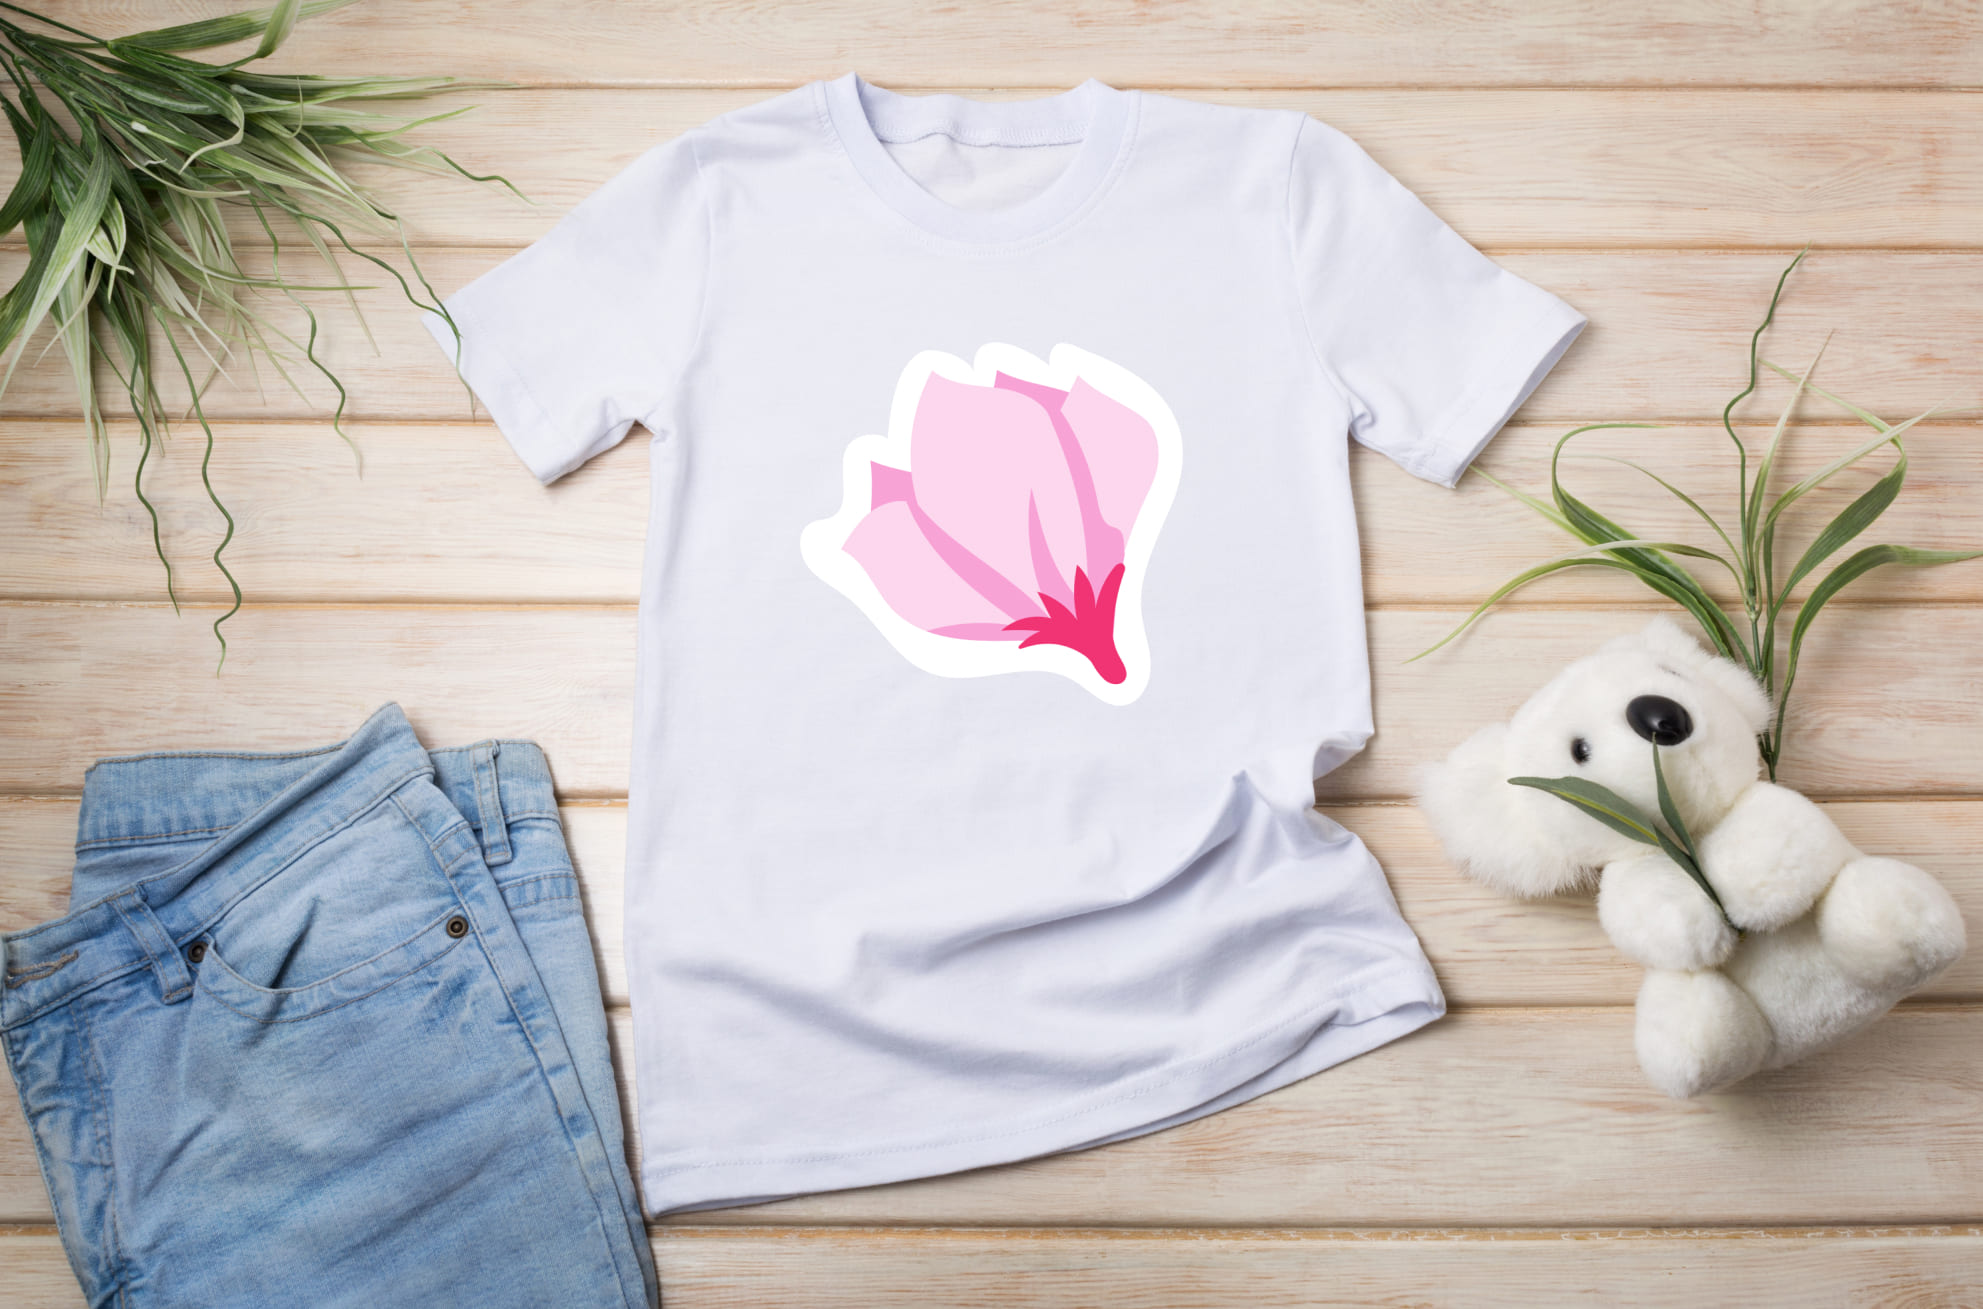 Blossom flower t-shirt designs.